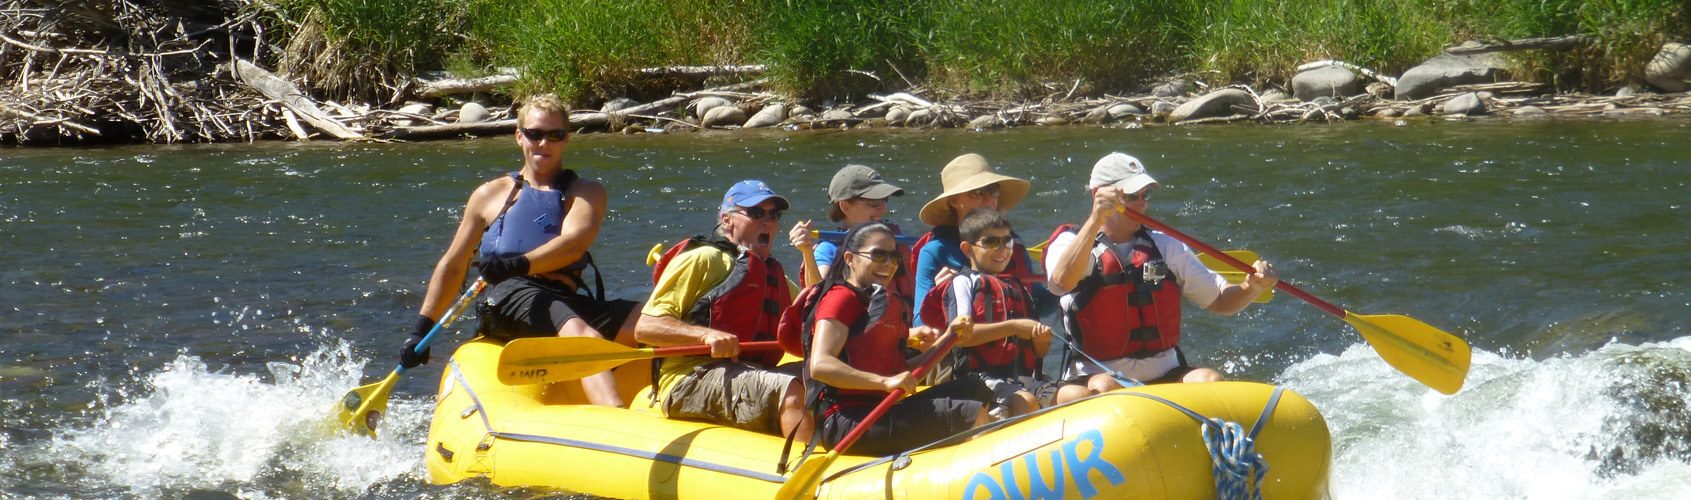 Middle Roaring Fork River rafting